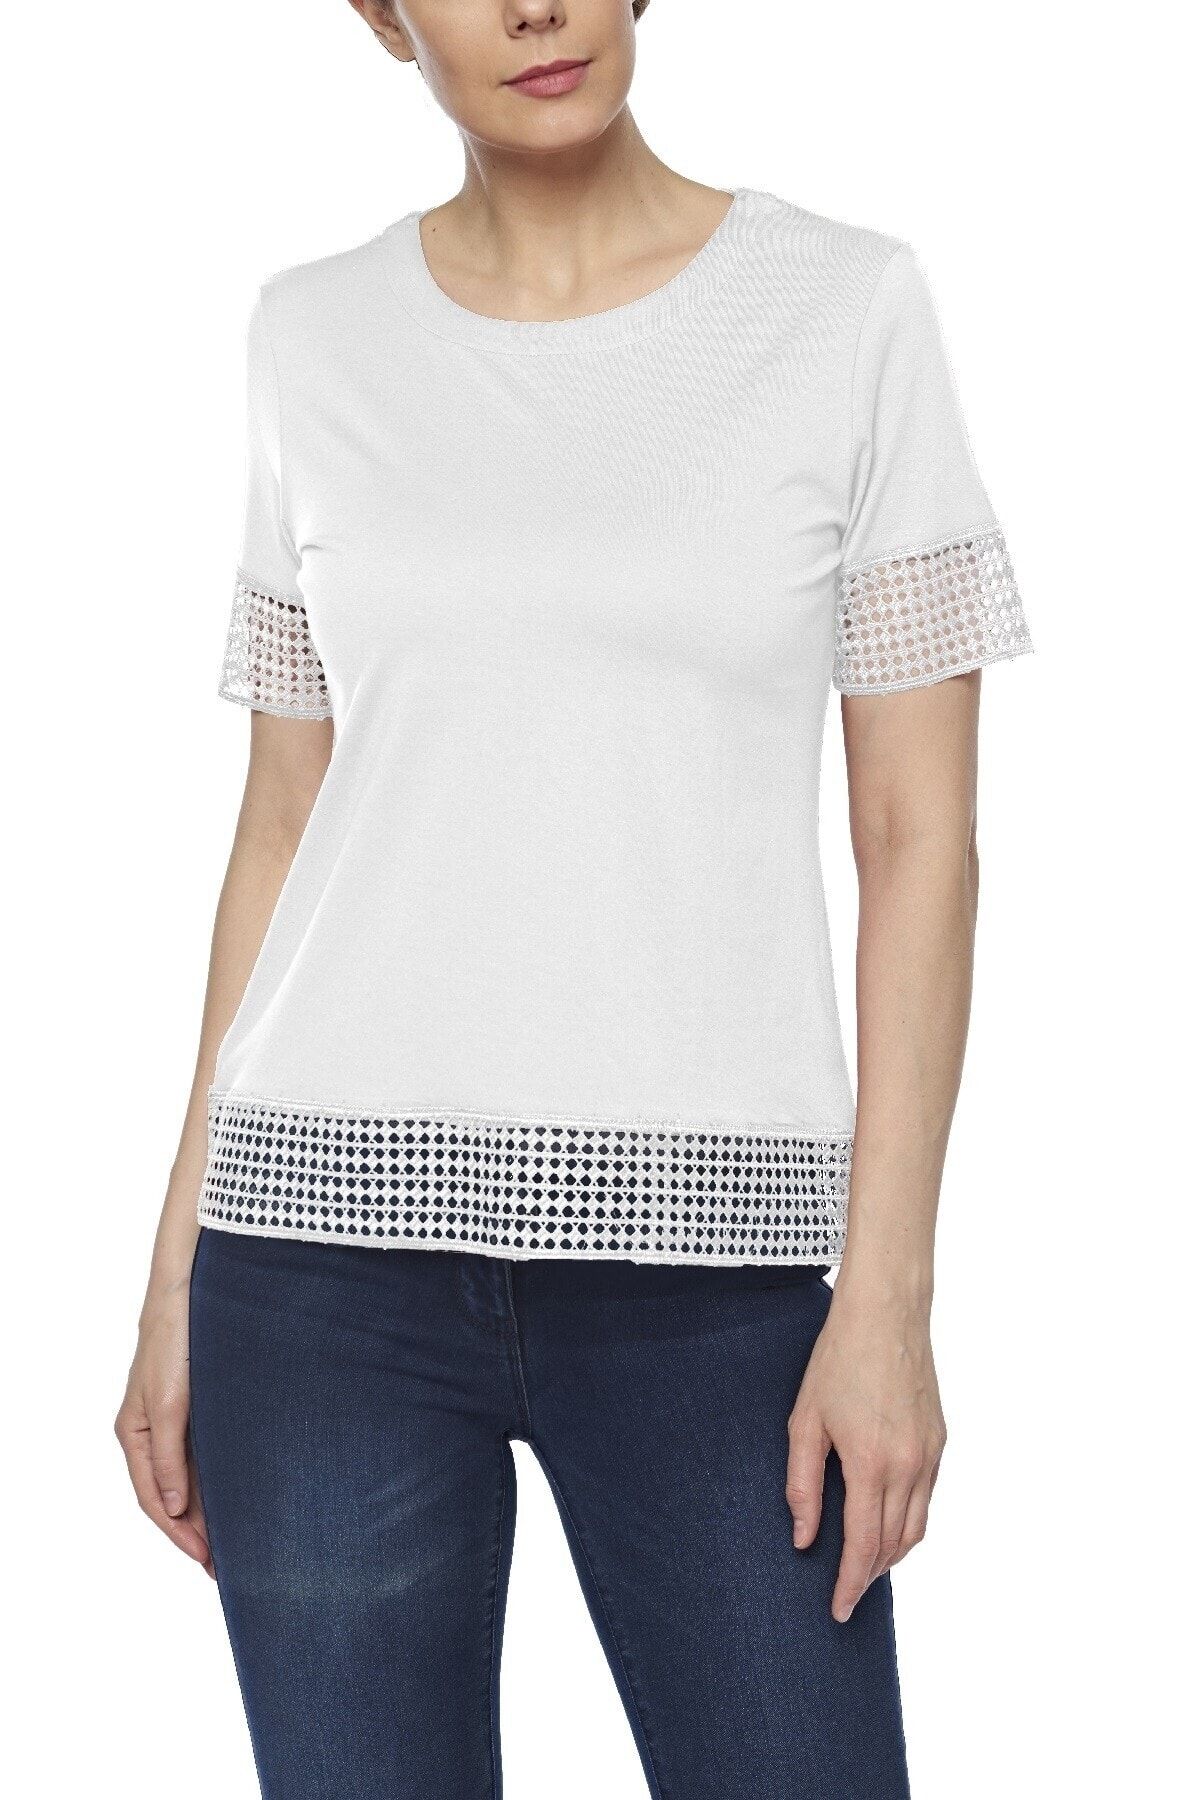 fsm1453 Kadın Pamuklu Modal Kısa Kolluy Üst Comfrot Fit Dantelli T-shirt -2412